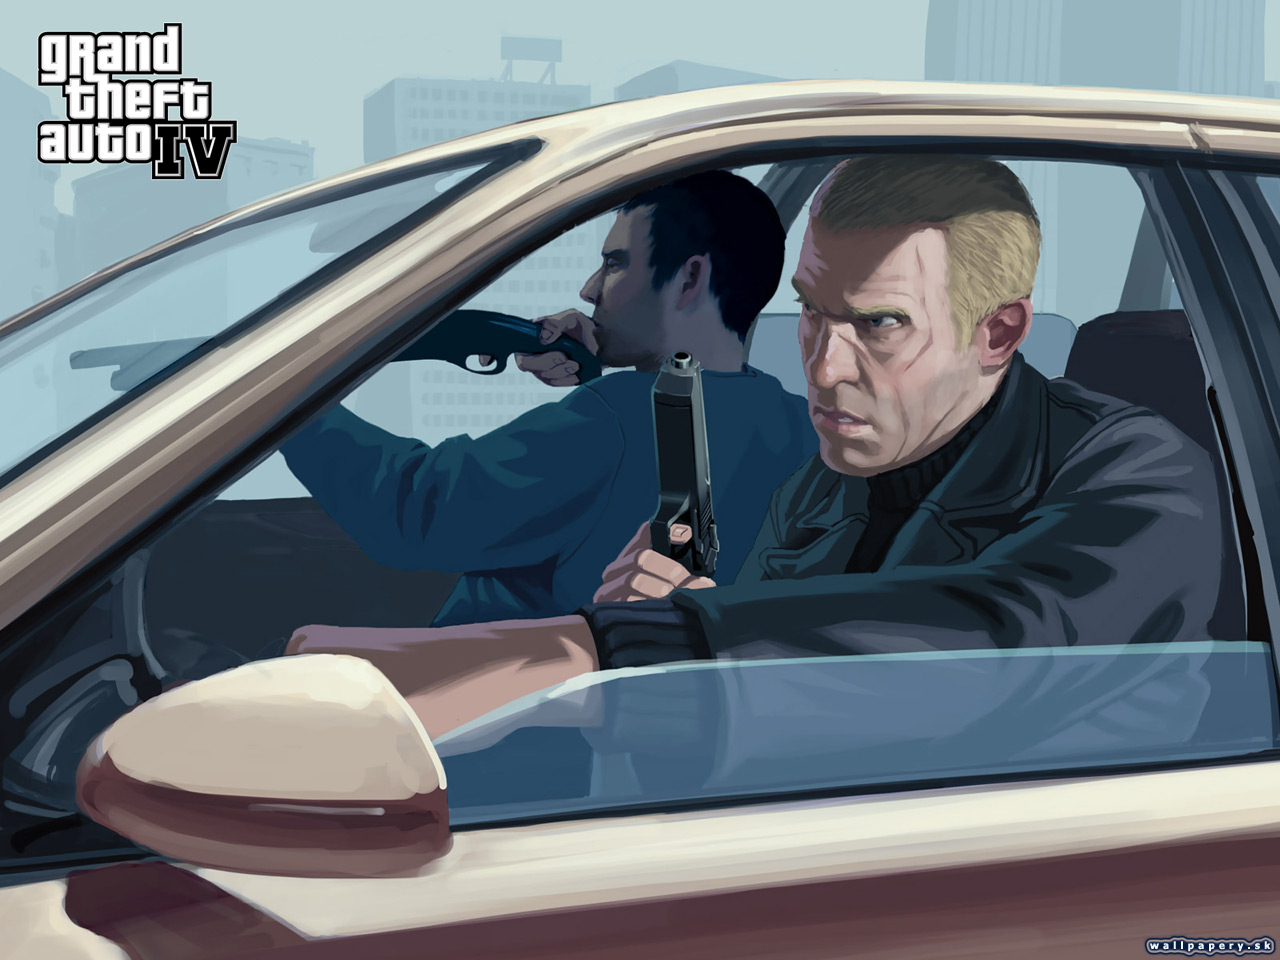 Grand Theft Auto IV - wallpaper 22